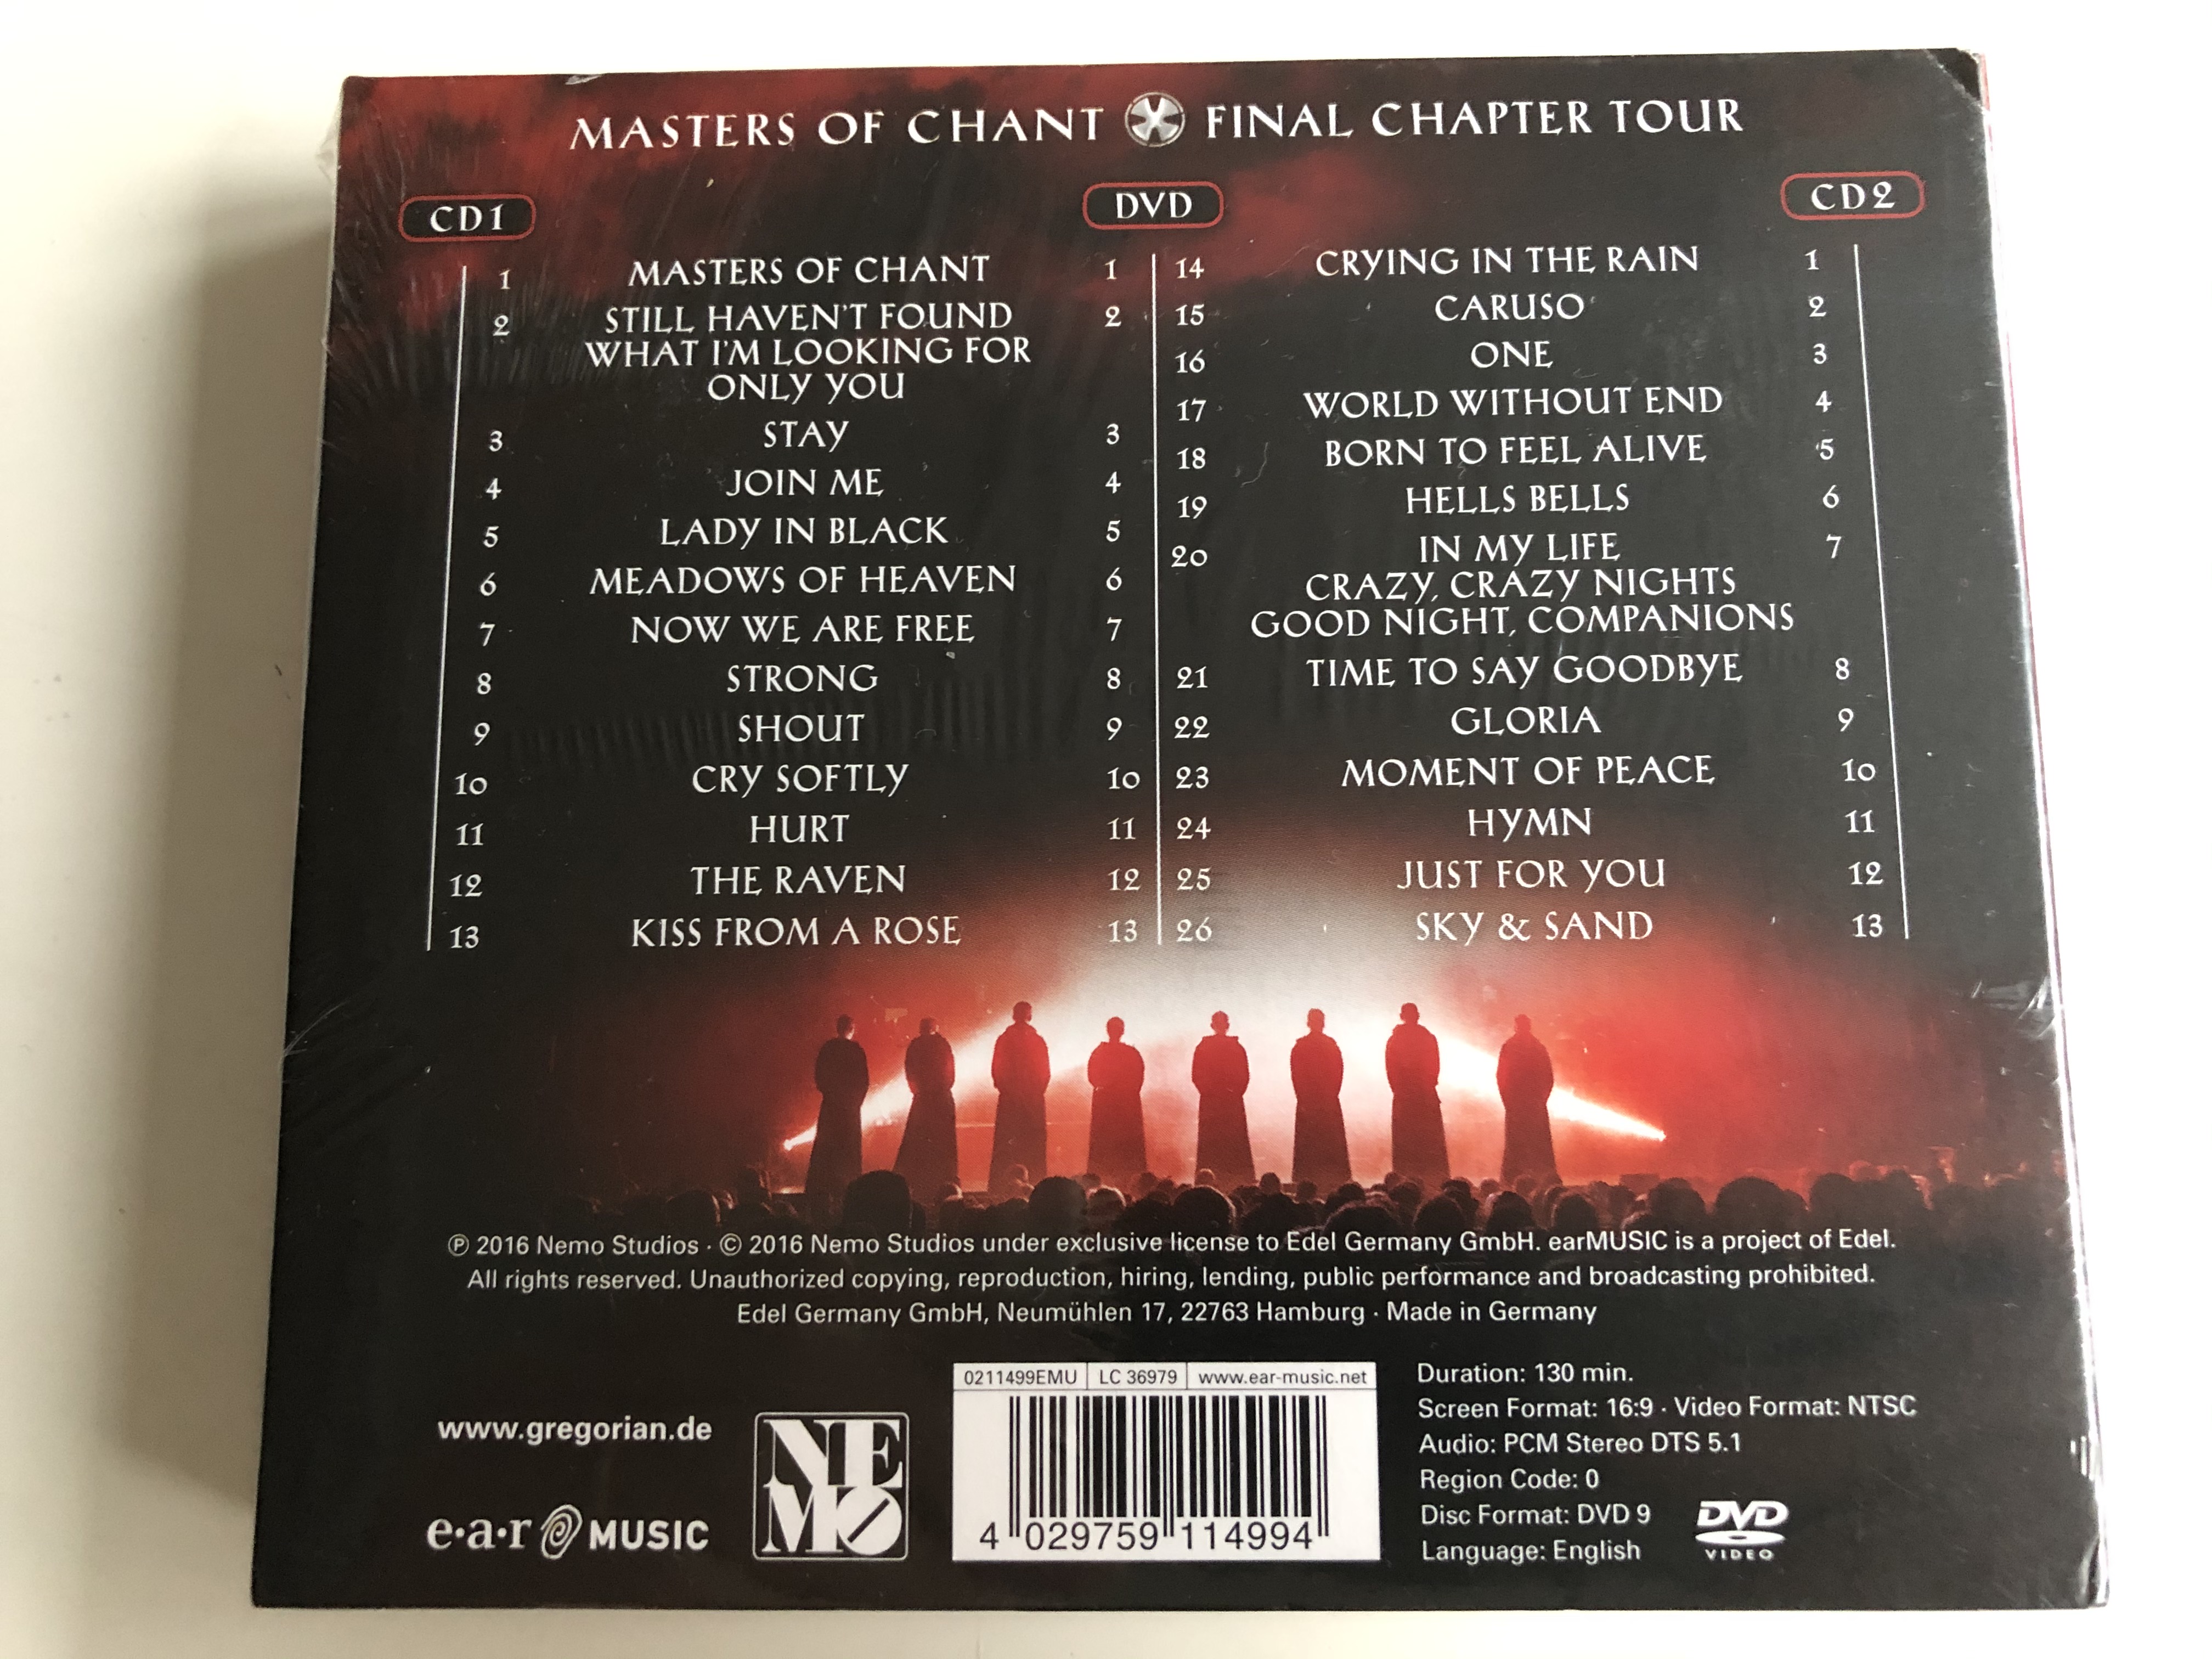 gregorian-live-masters-of-chant-x-final-chapter-tour-the-original-ear-music-audio-cd-dvd-cd-2016-0211499emu-0211499emu-3-.jpg